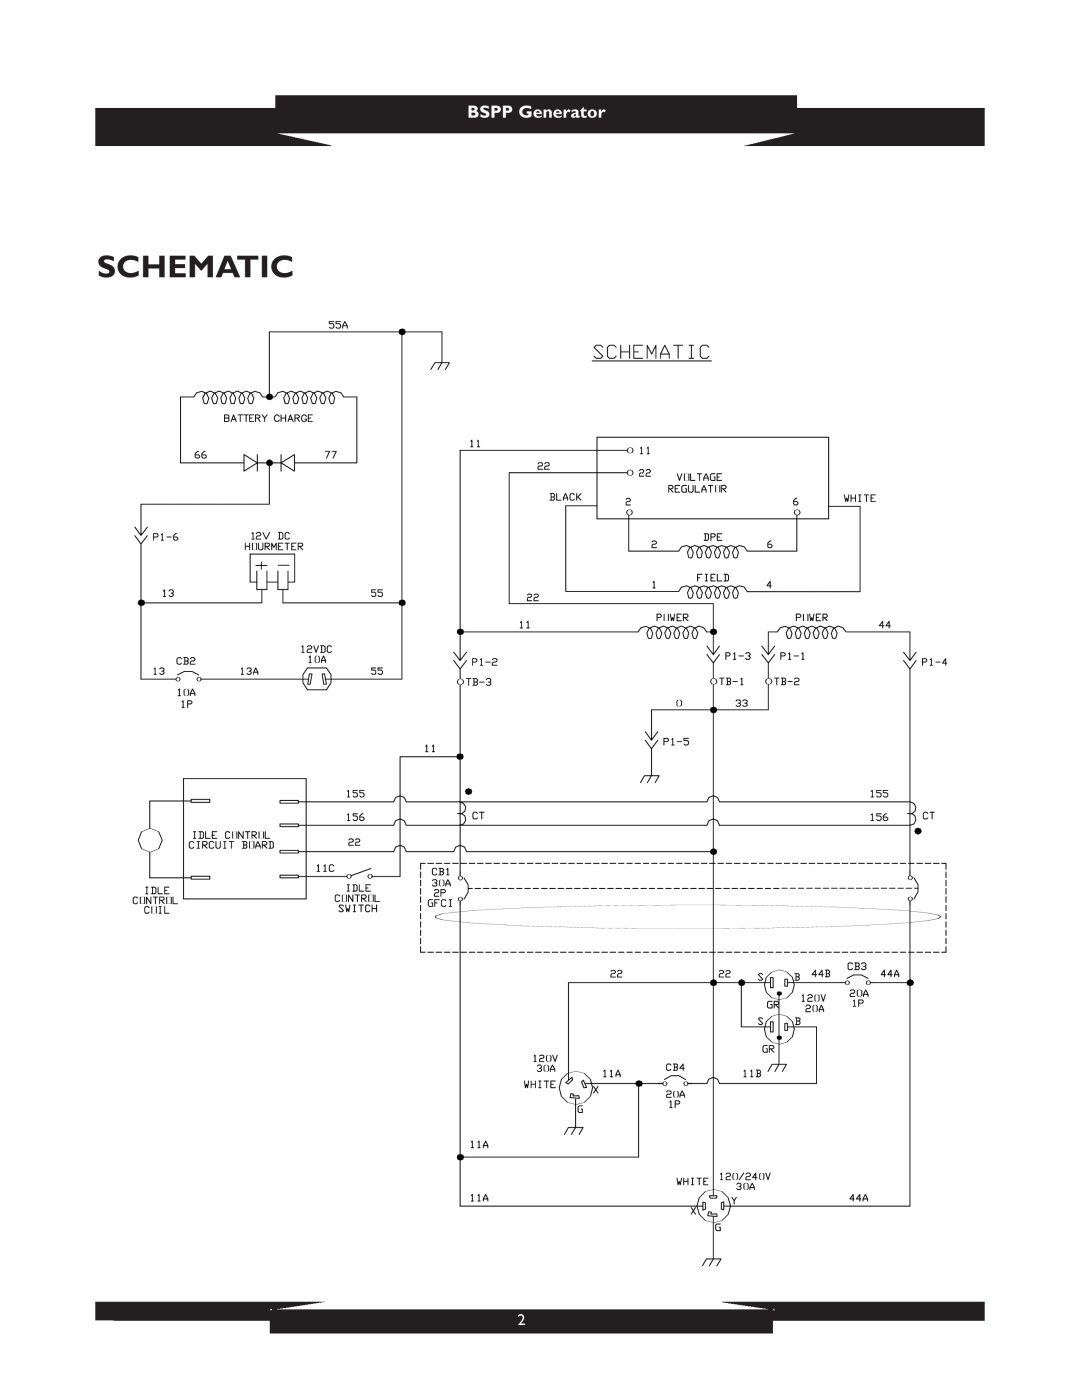 Briggs & Stratton 1933 manual Schematic, BSPP Generator 